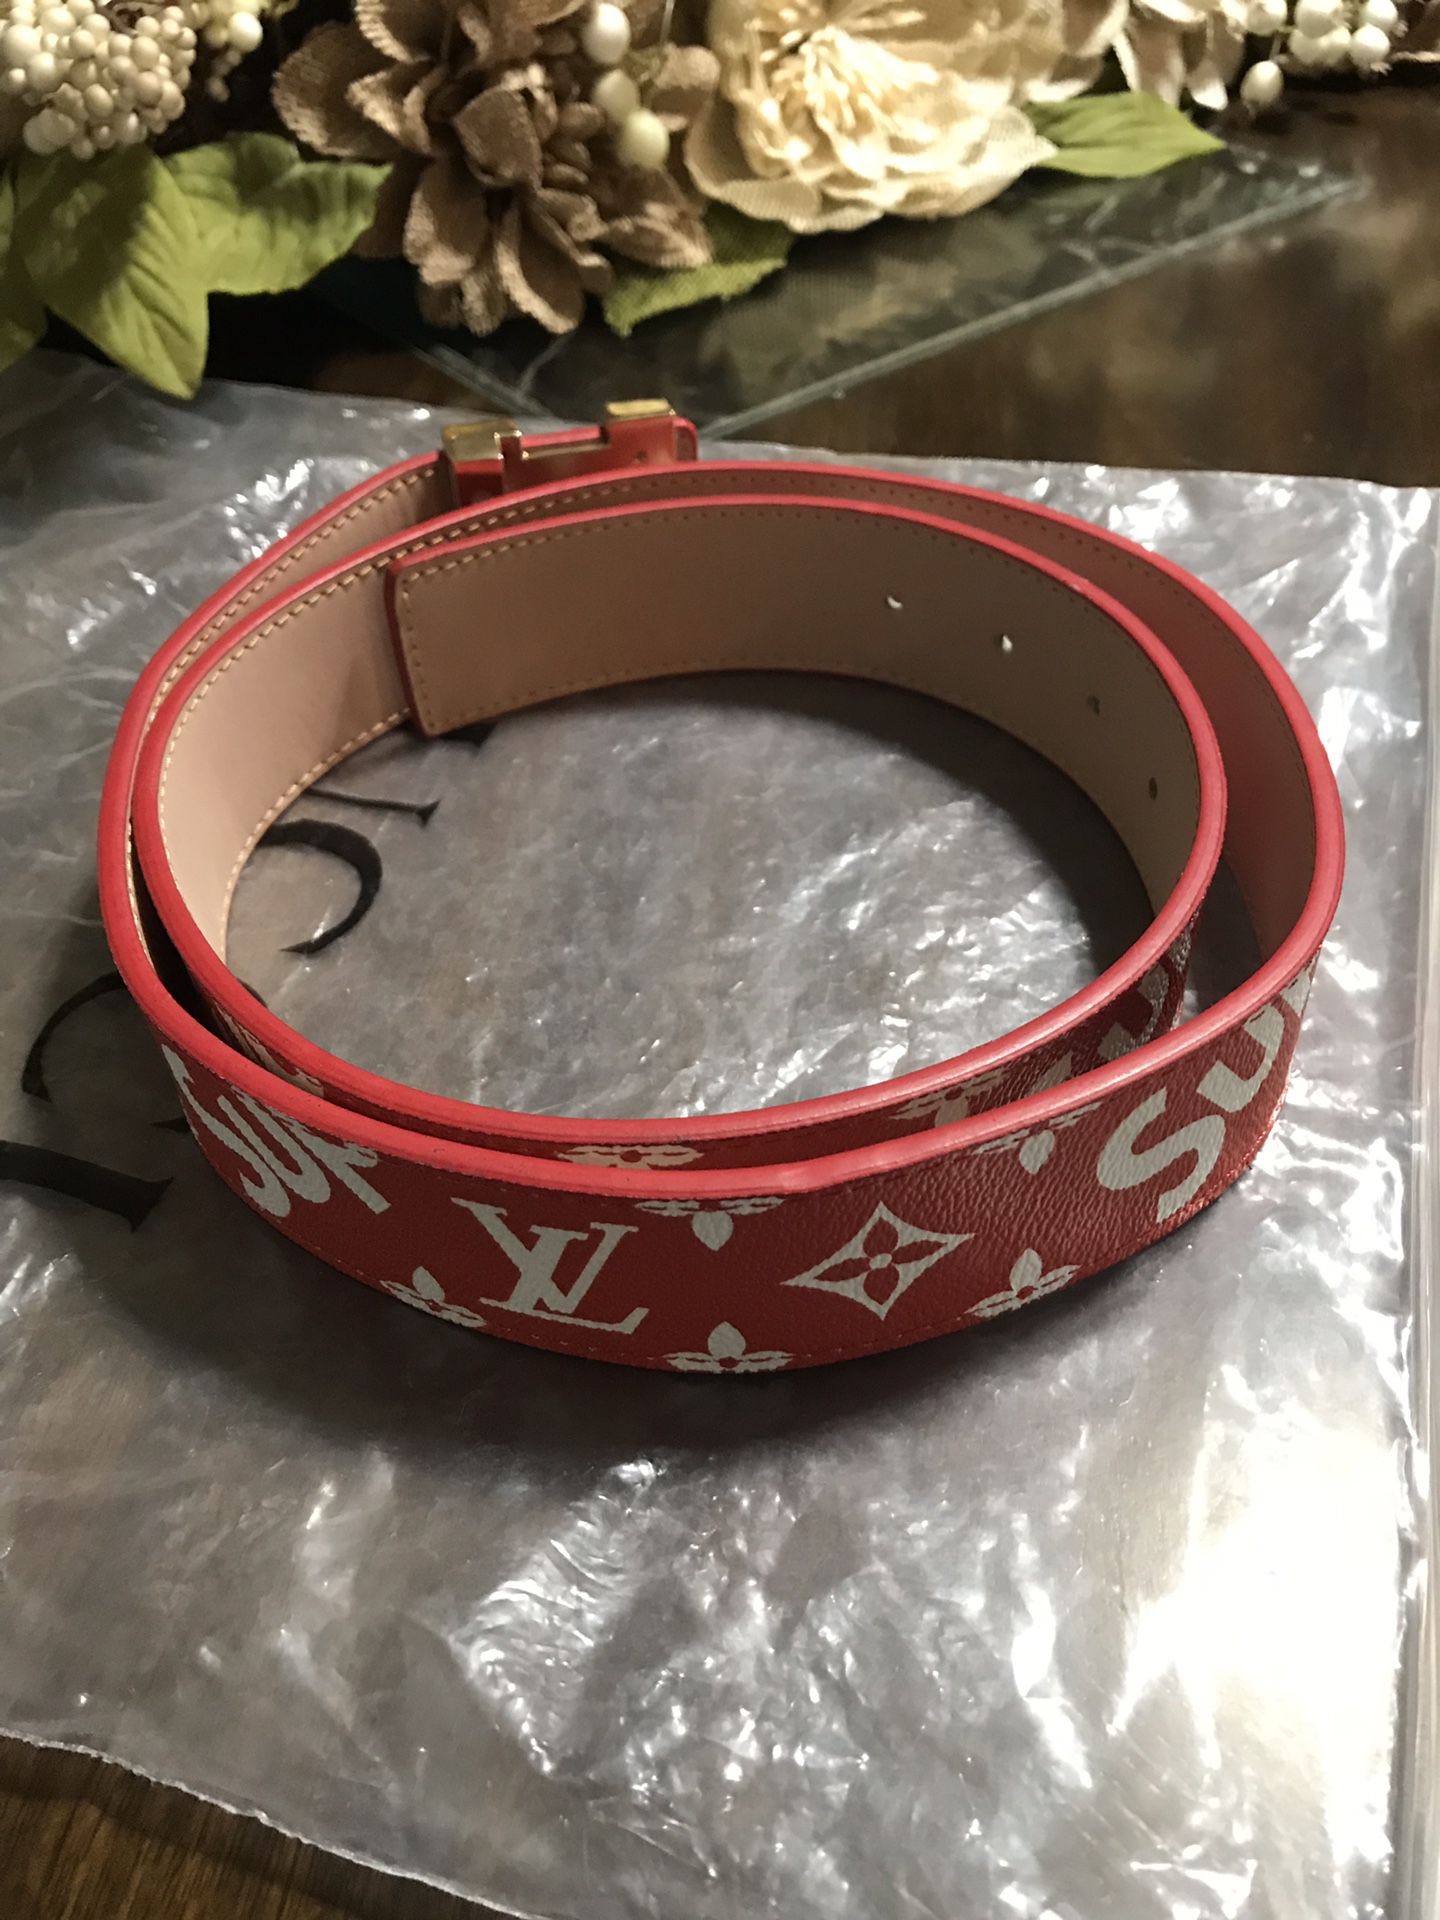 Louis Vuitton supreme belt for sale in Texas City, TX - 5miles